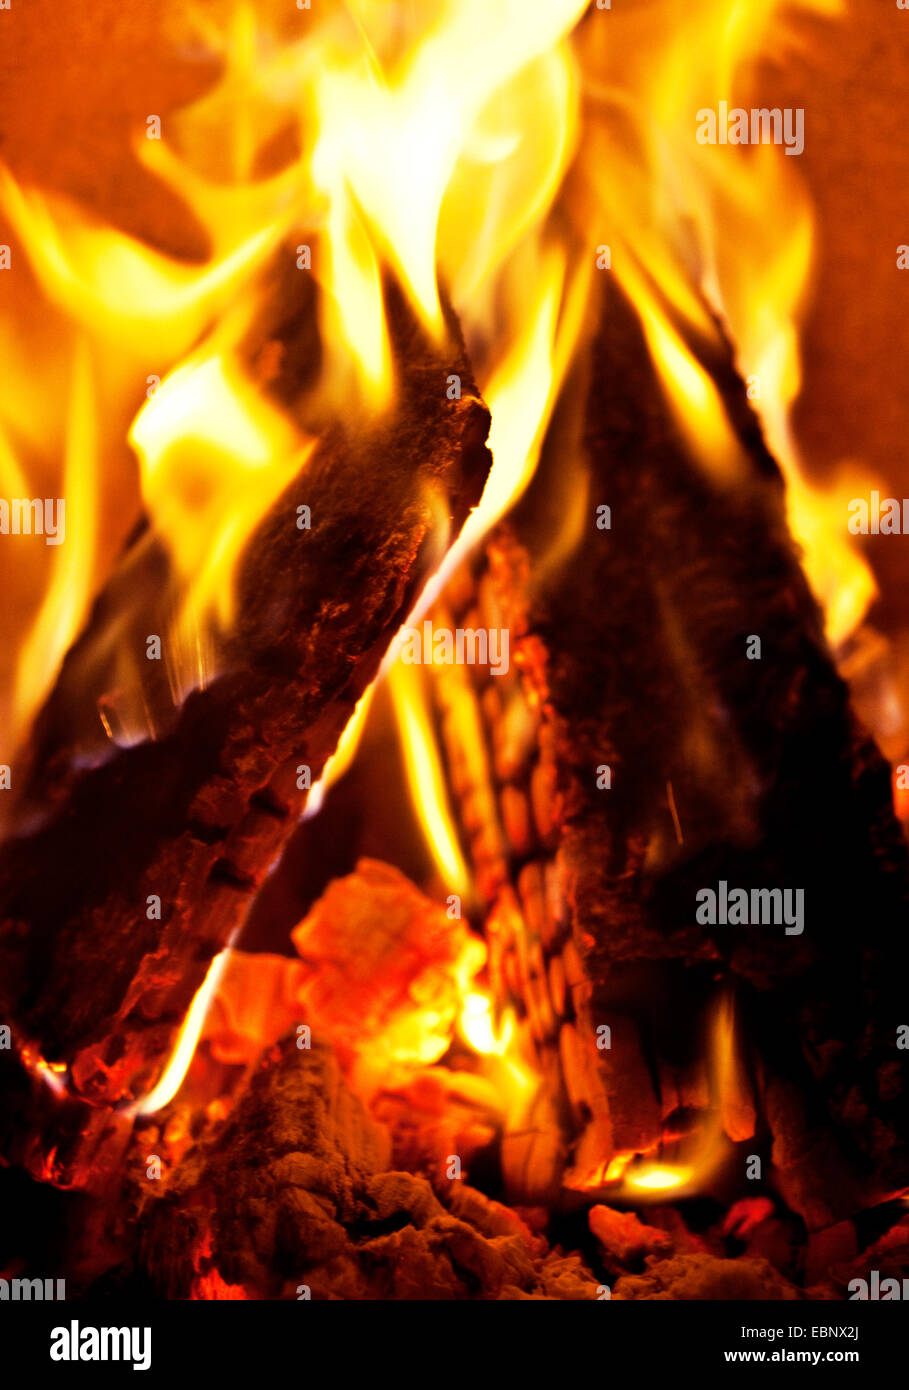 two burning logs Stock Photo